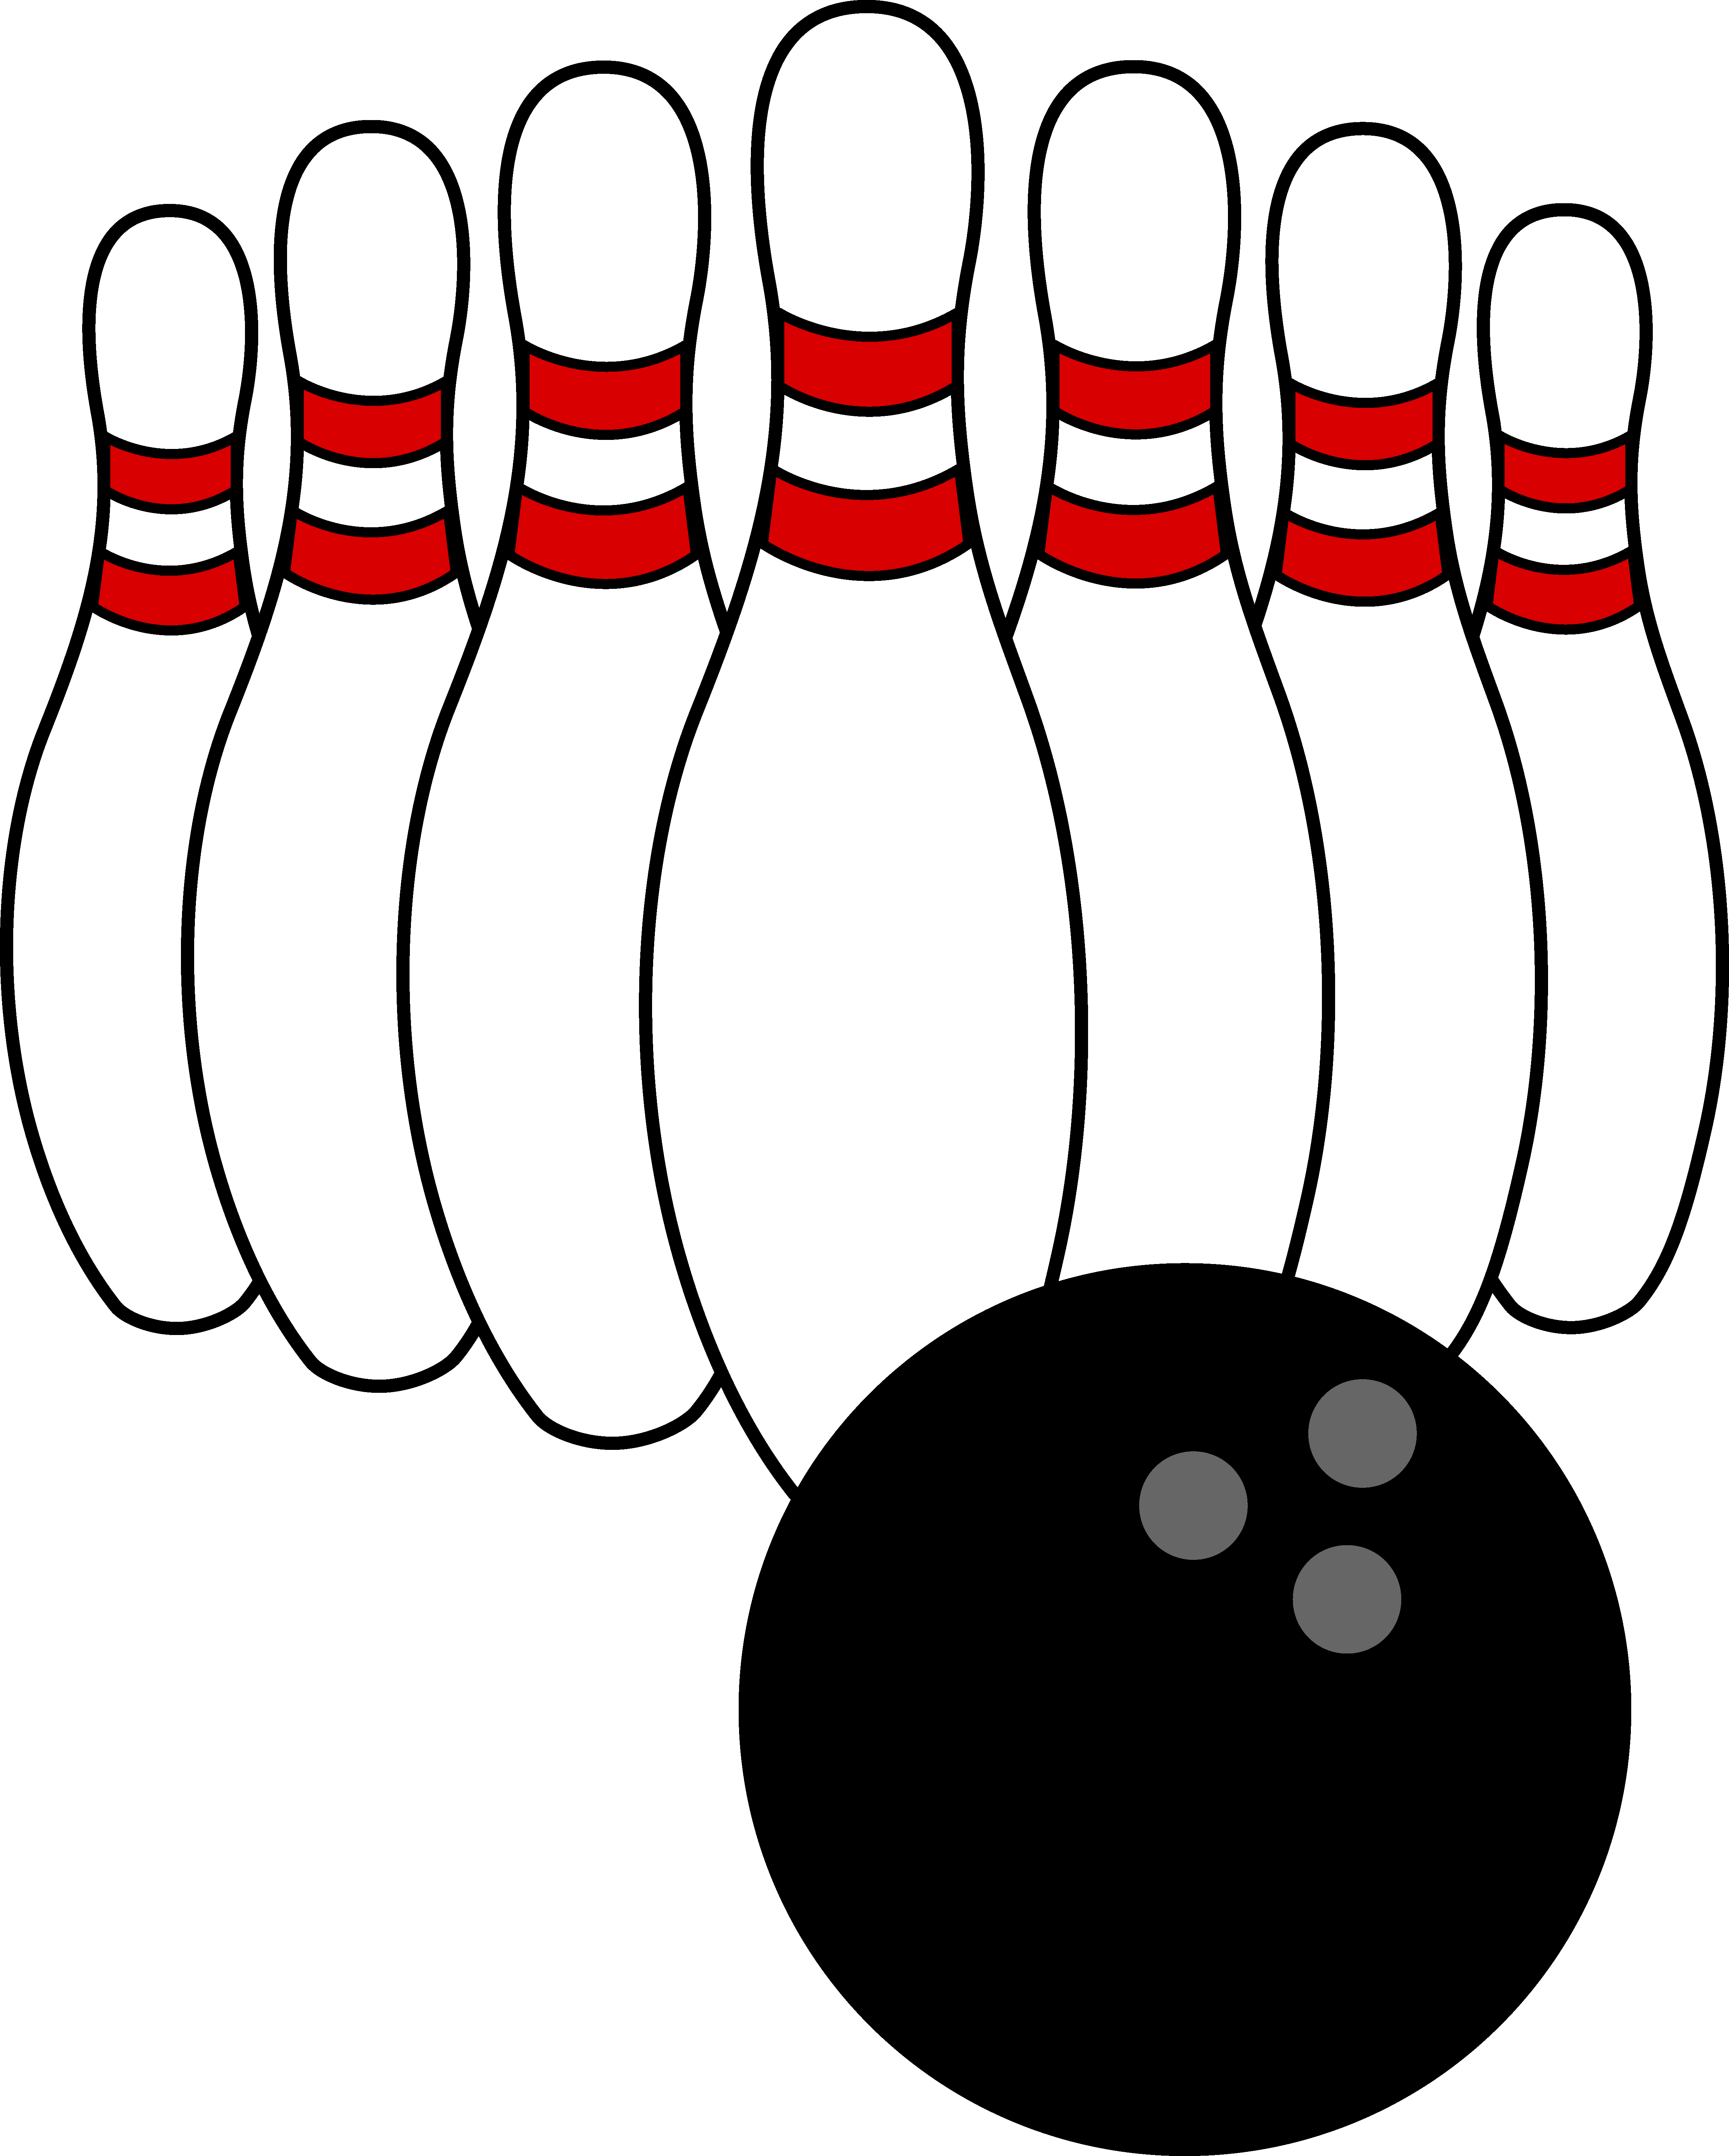 Bowling clip art.